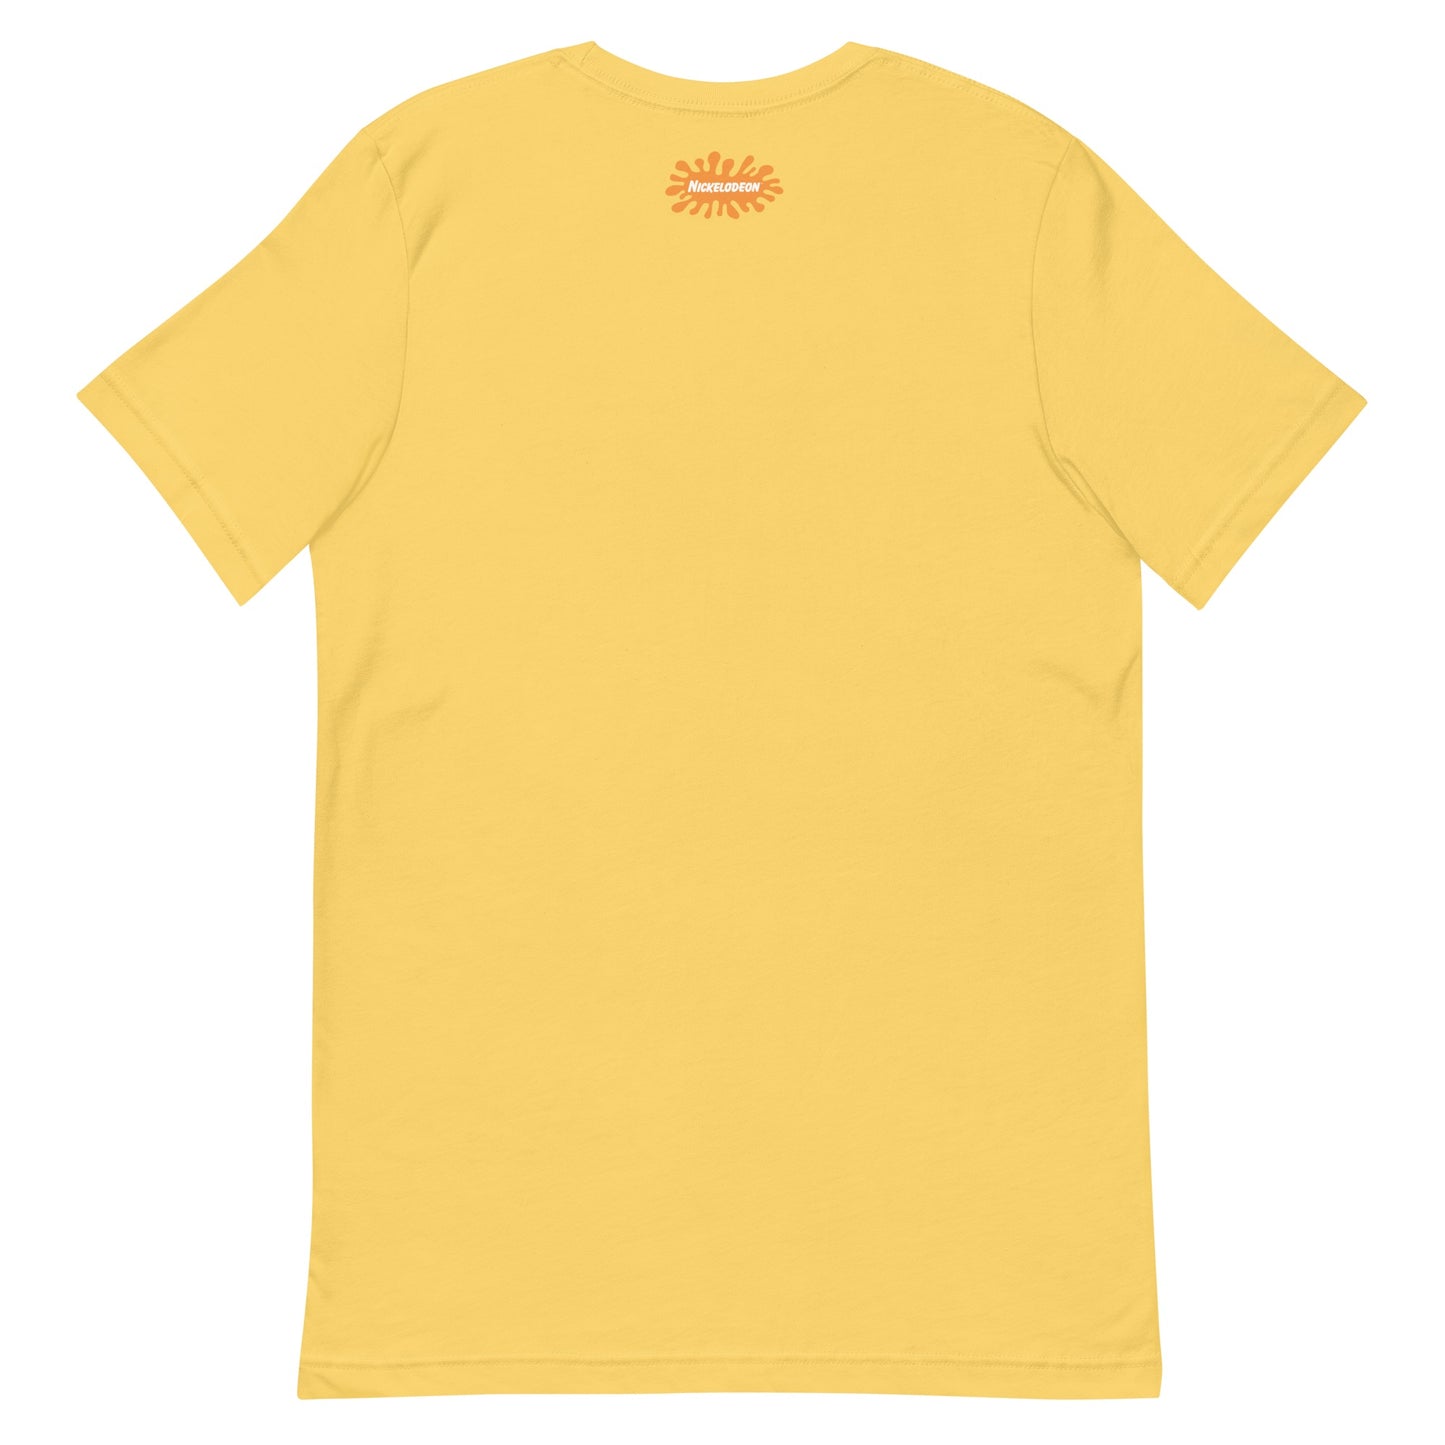 Good Burger Logo Adult Short Sleeve T-Shirt